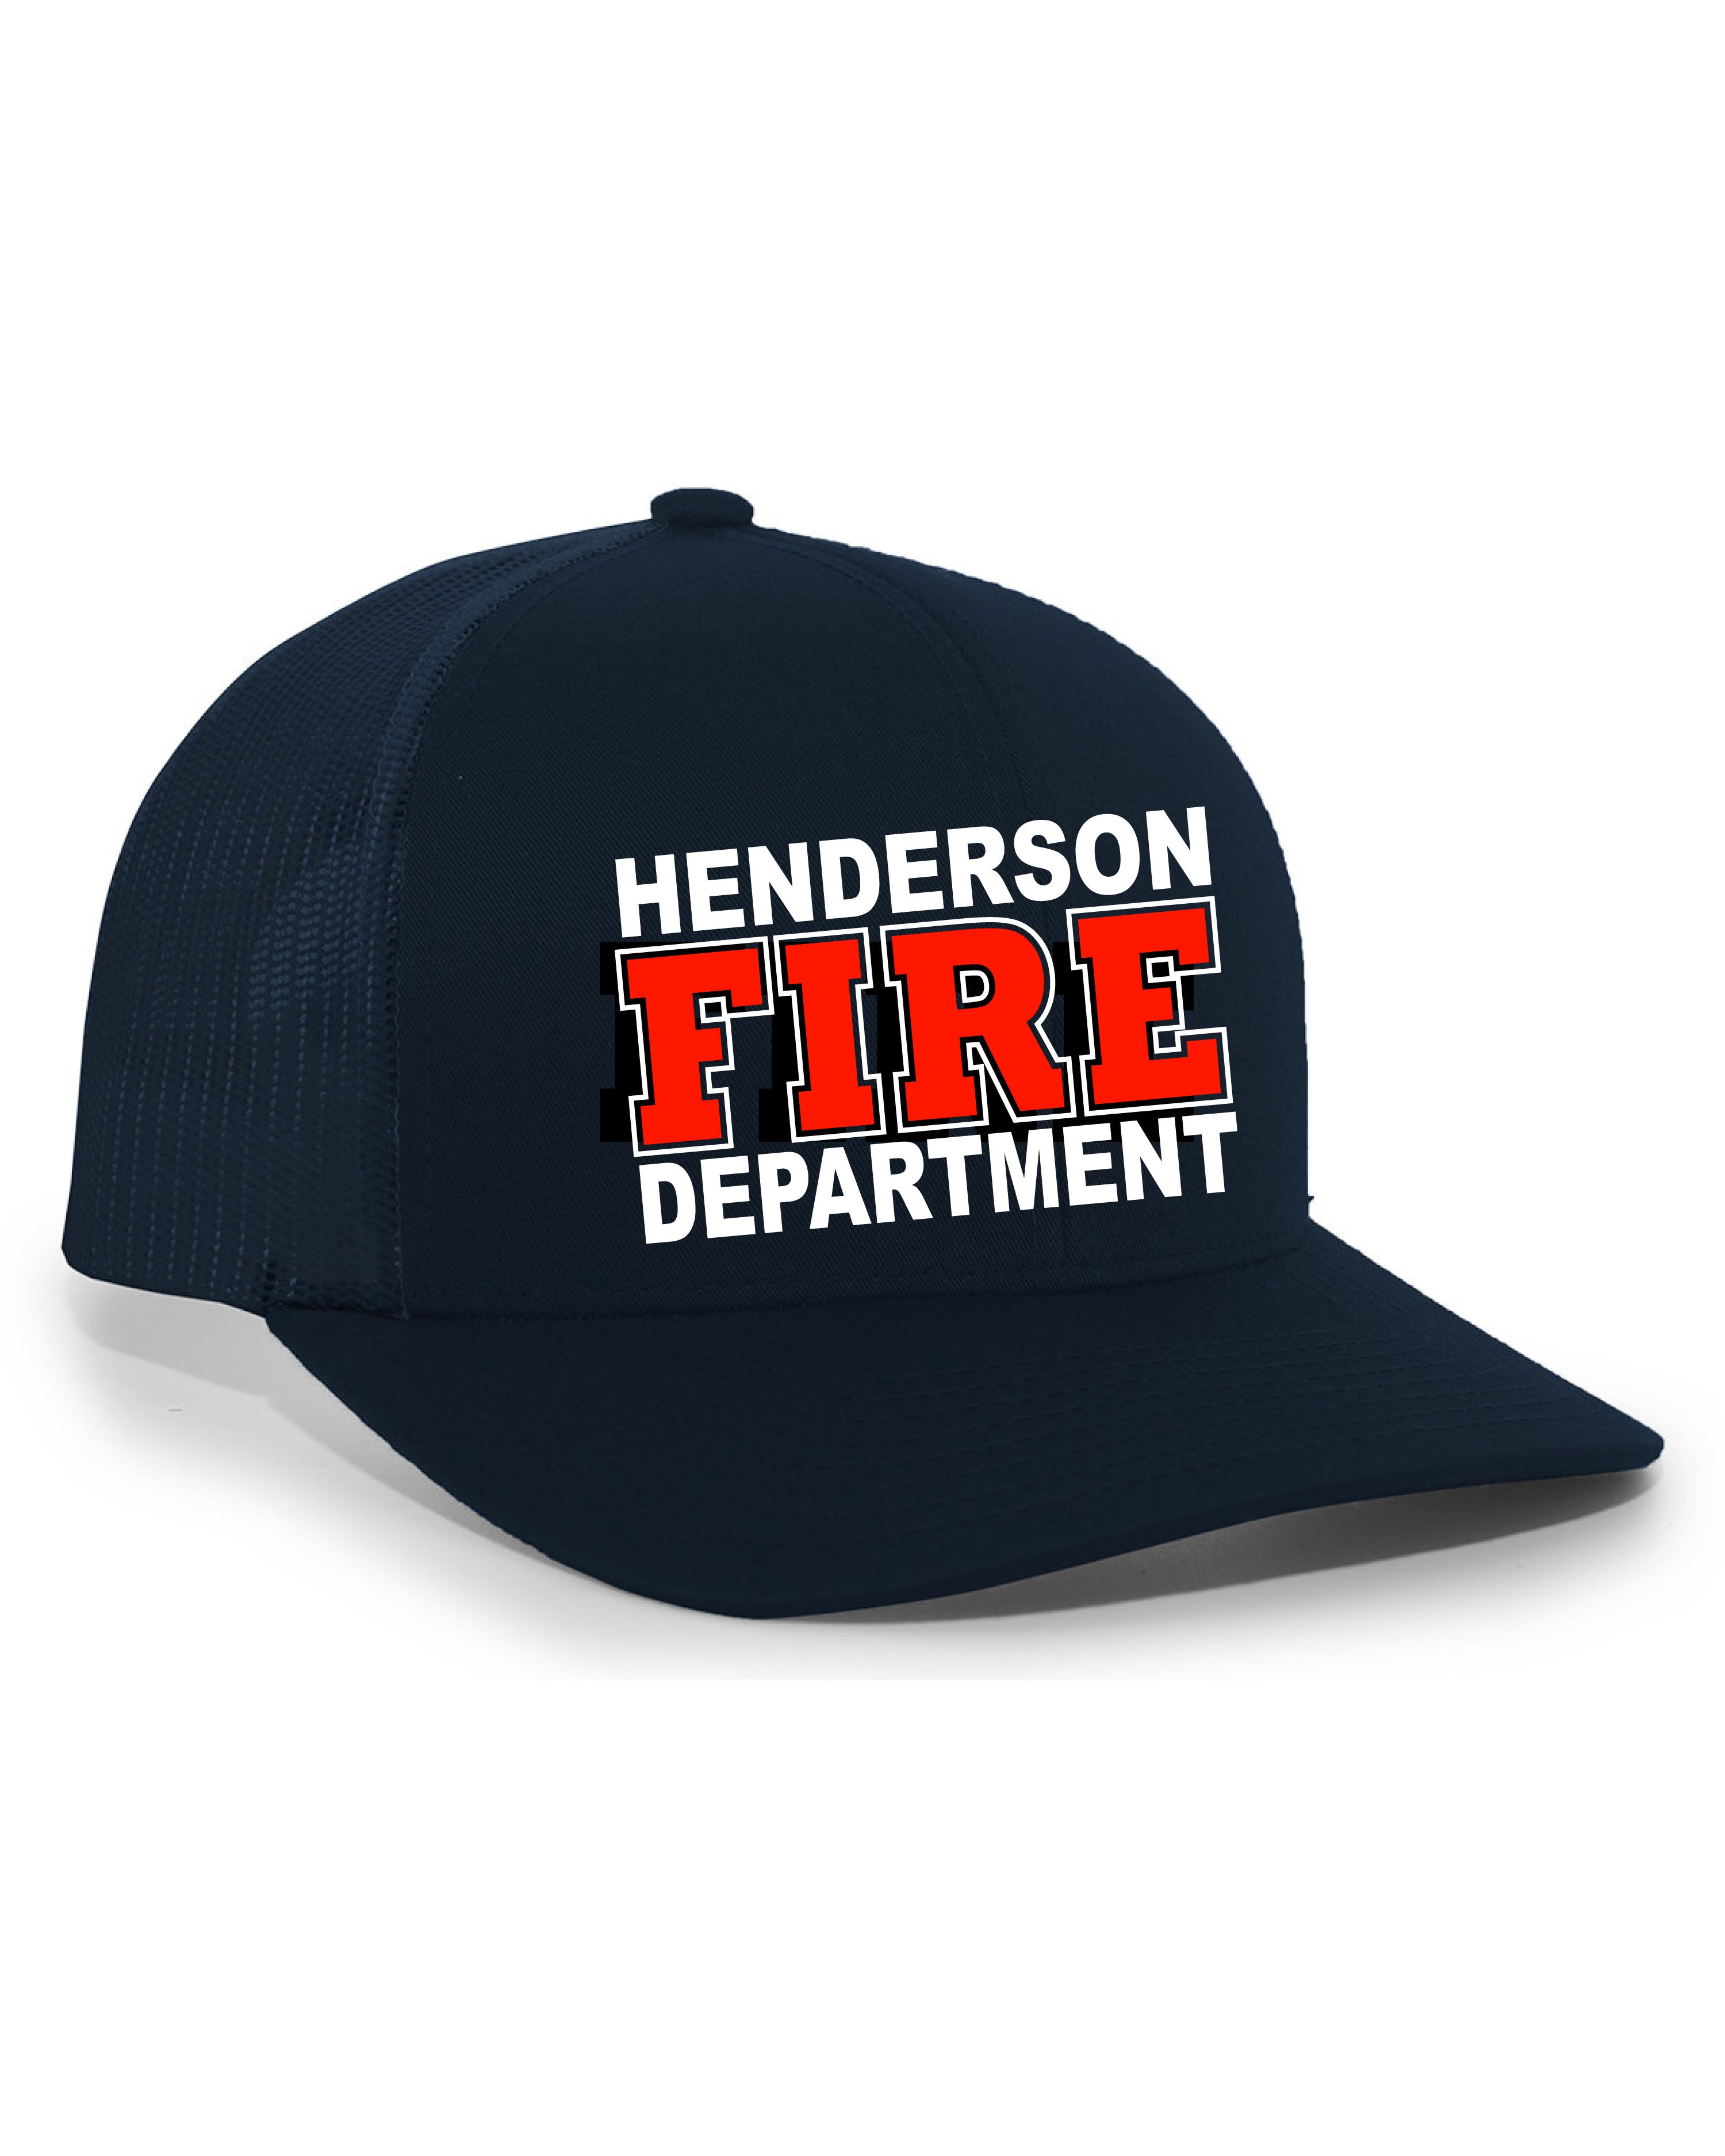 HFD (Henderson Fire Department) Snap Back Trucker Hat